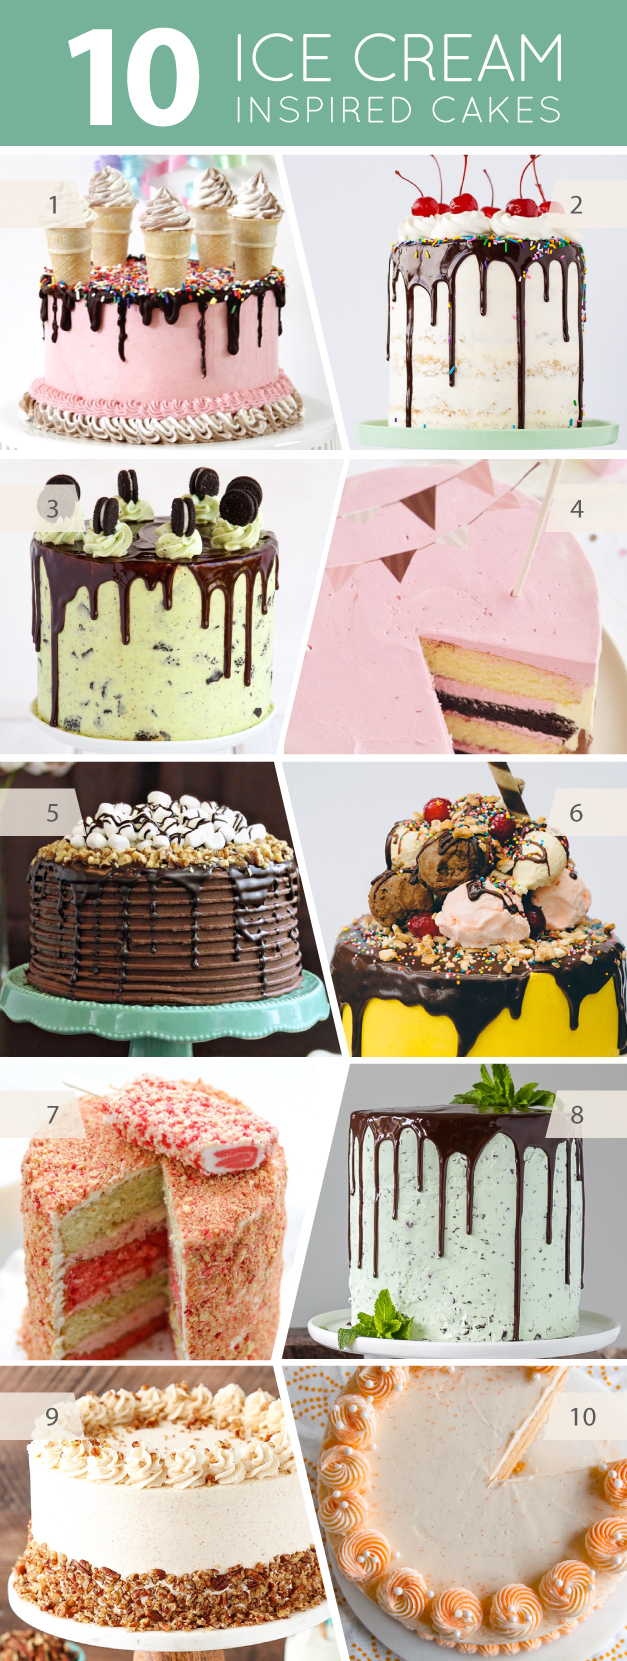 10 Ice Cream Inspired Cakes | on TheCakeBlog.com